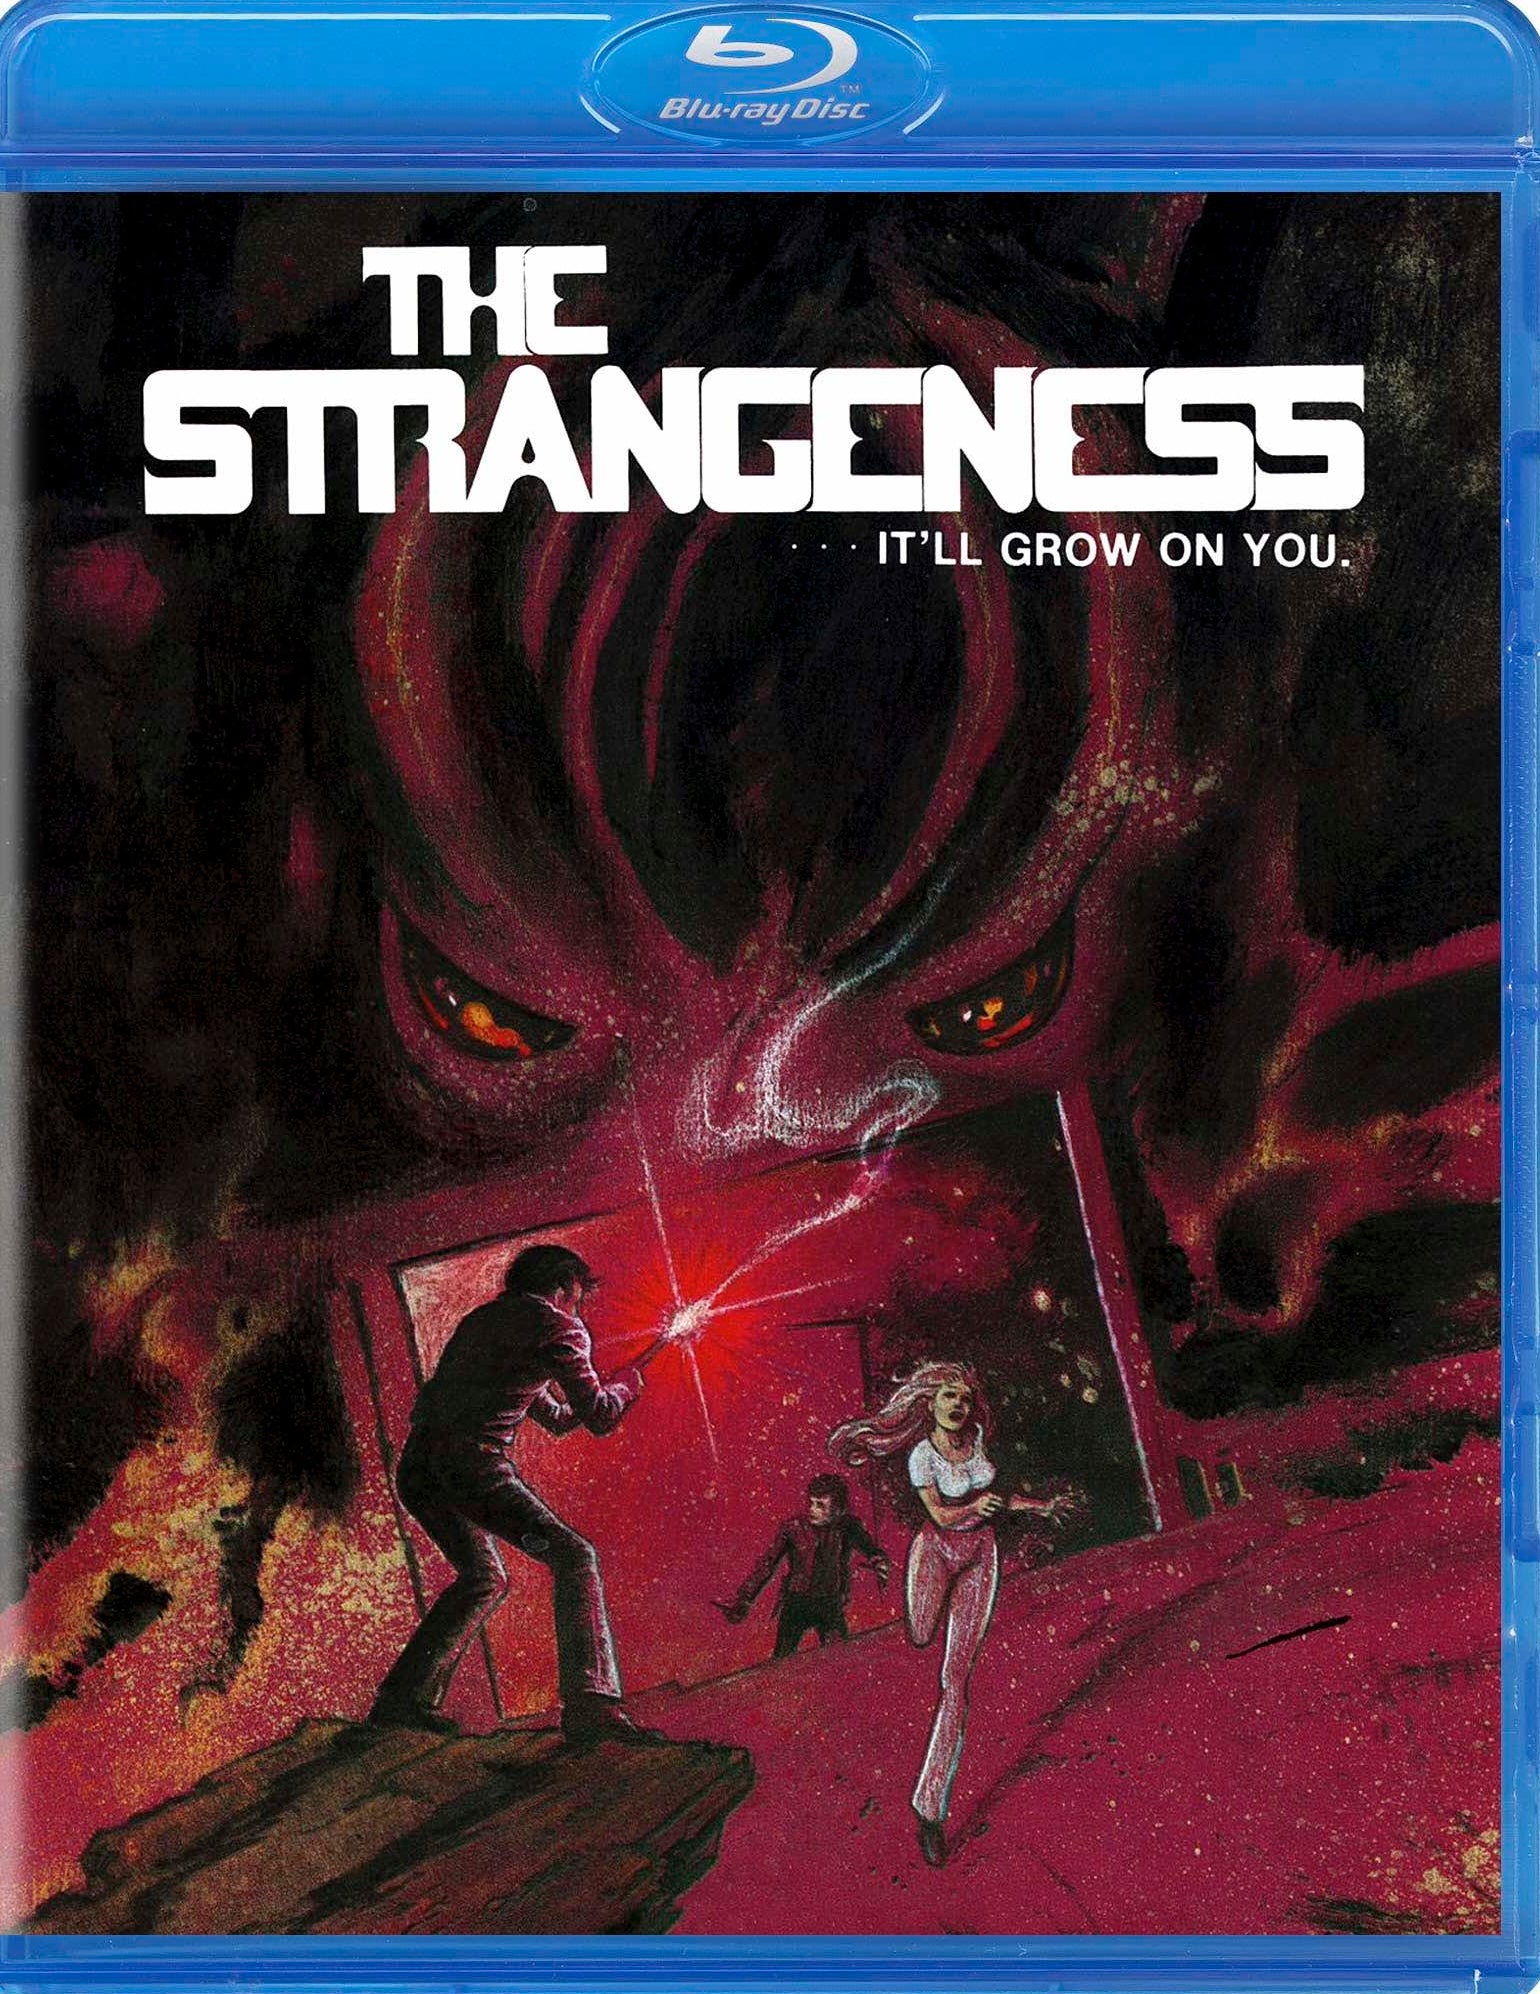 Strangeness [Blu-ray] cover art